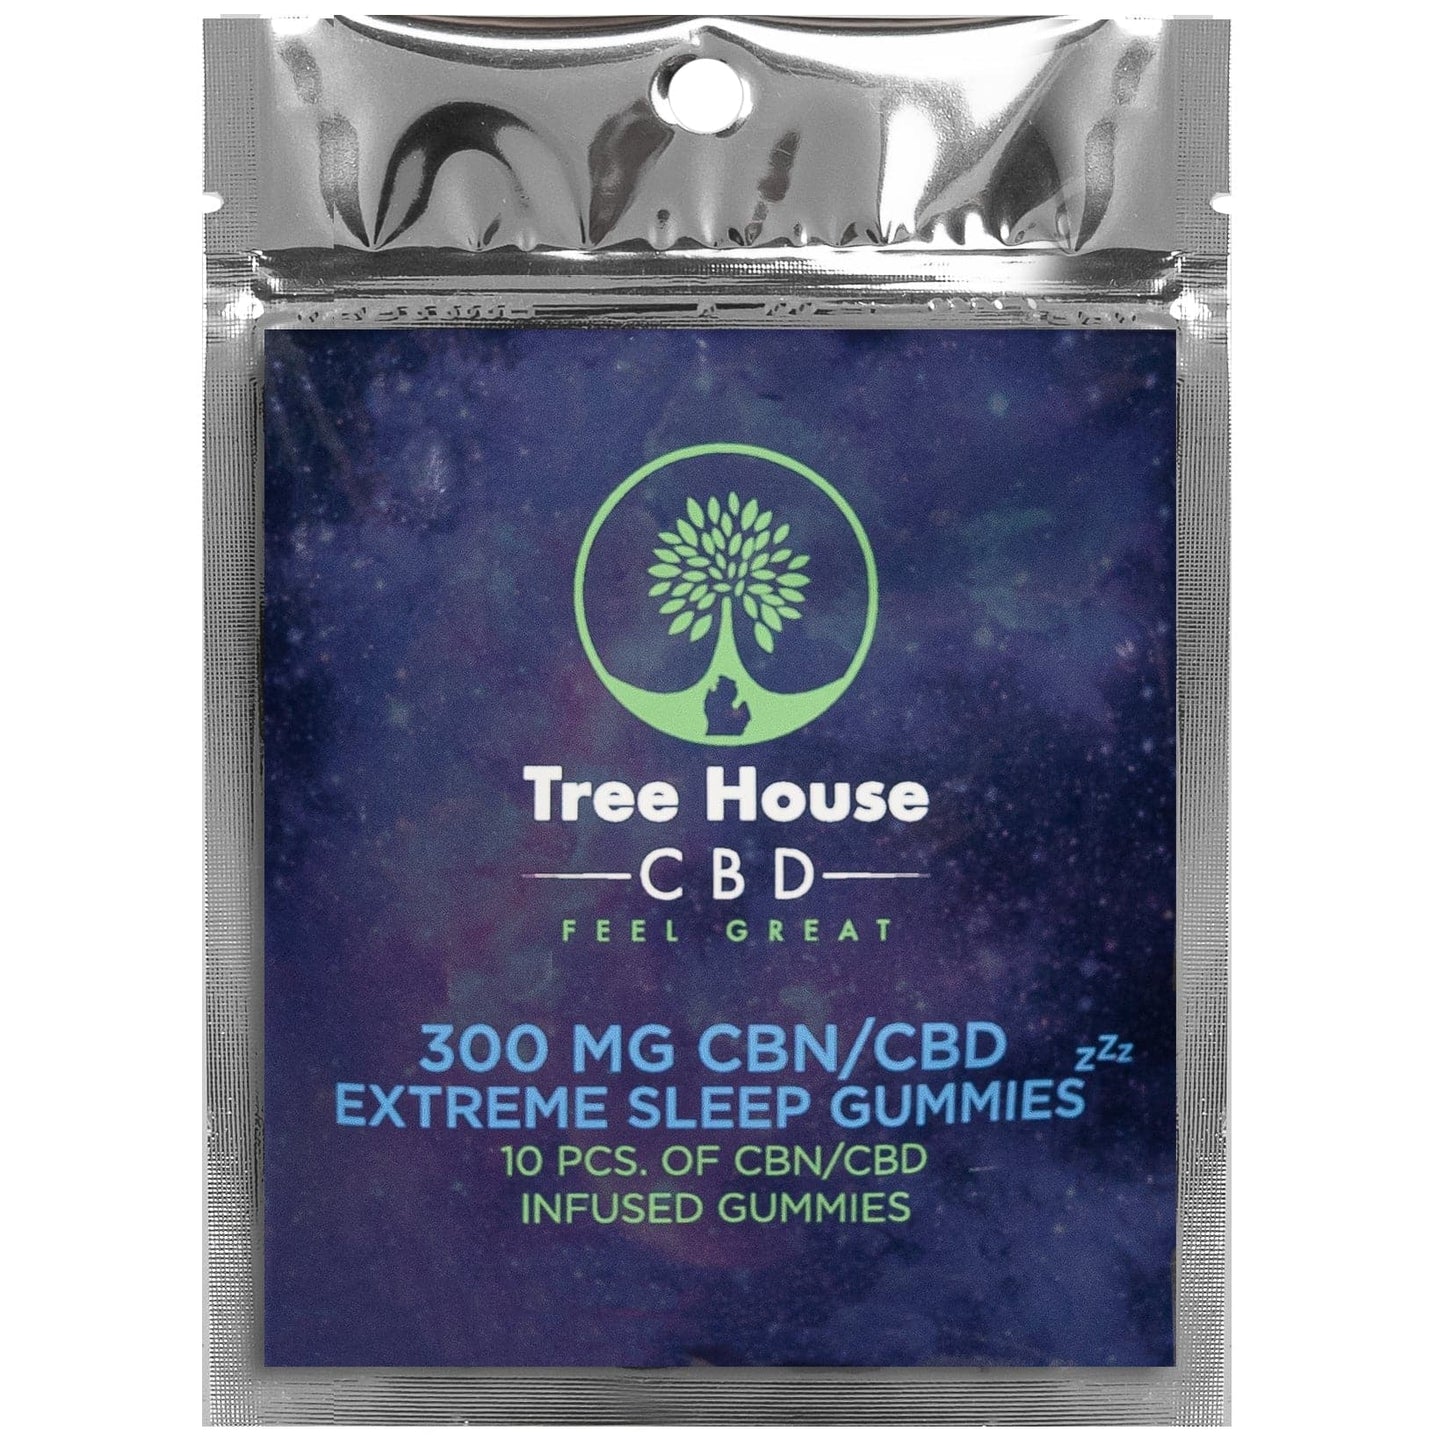 Extreme sleep gummy 300mg CBD/CBN (10 pack)